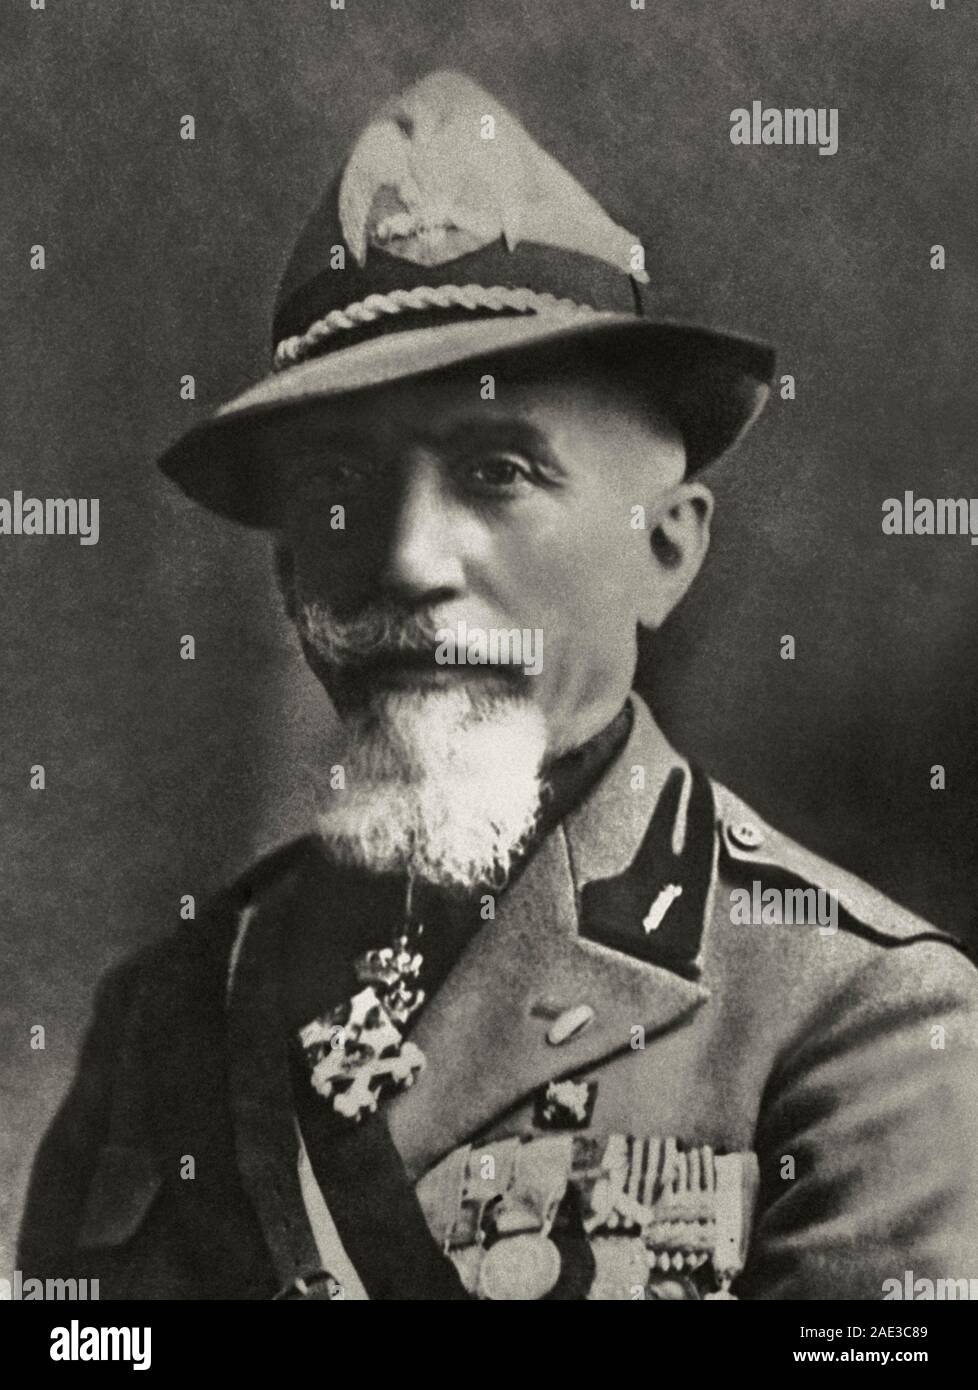 General Emilio De Bono (1866 - 1944) of the Italian Army, Commander-in-Chief of the Italian Forces in Eritrea, during the Second Italo-Ethiopian War, Stock Photo